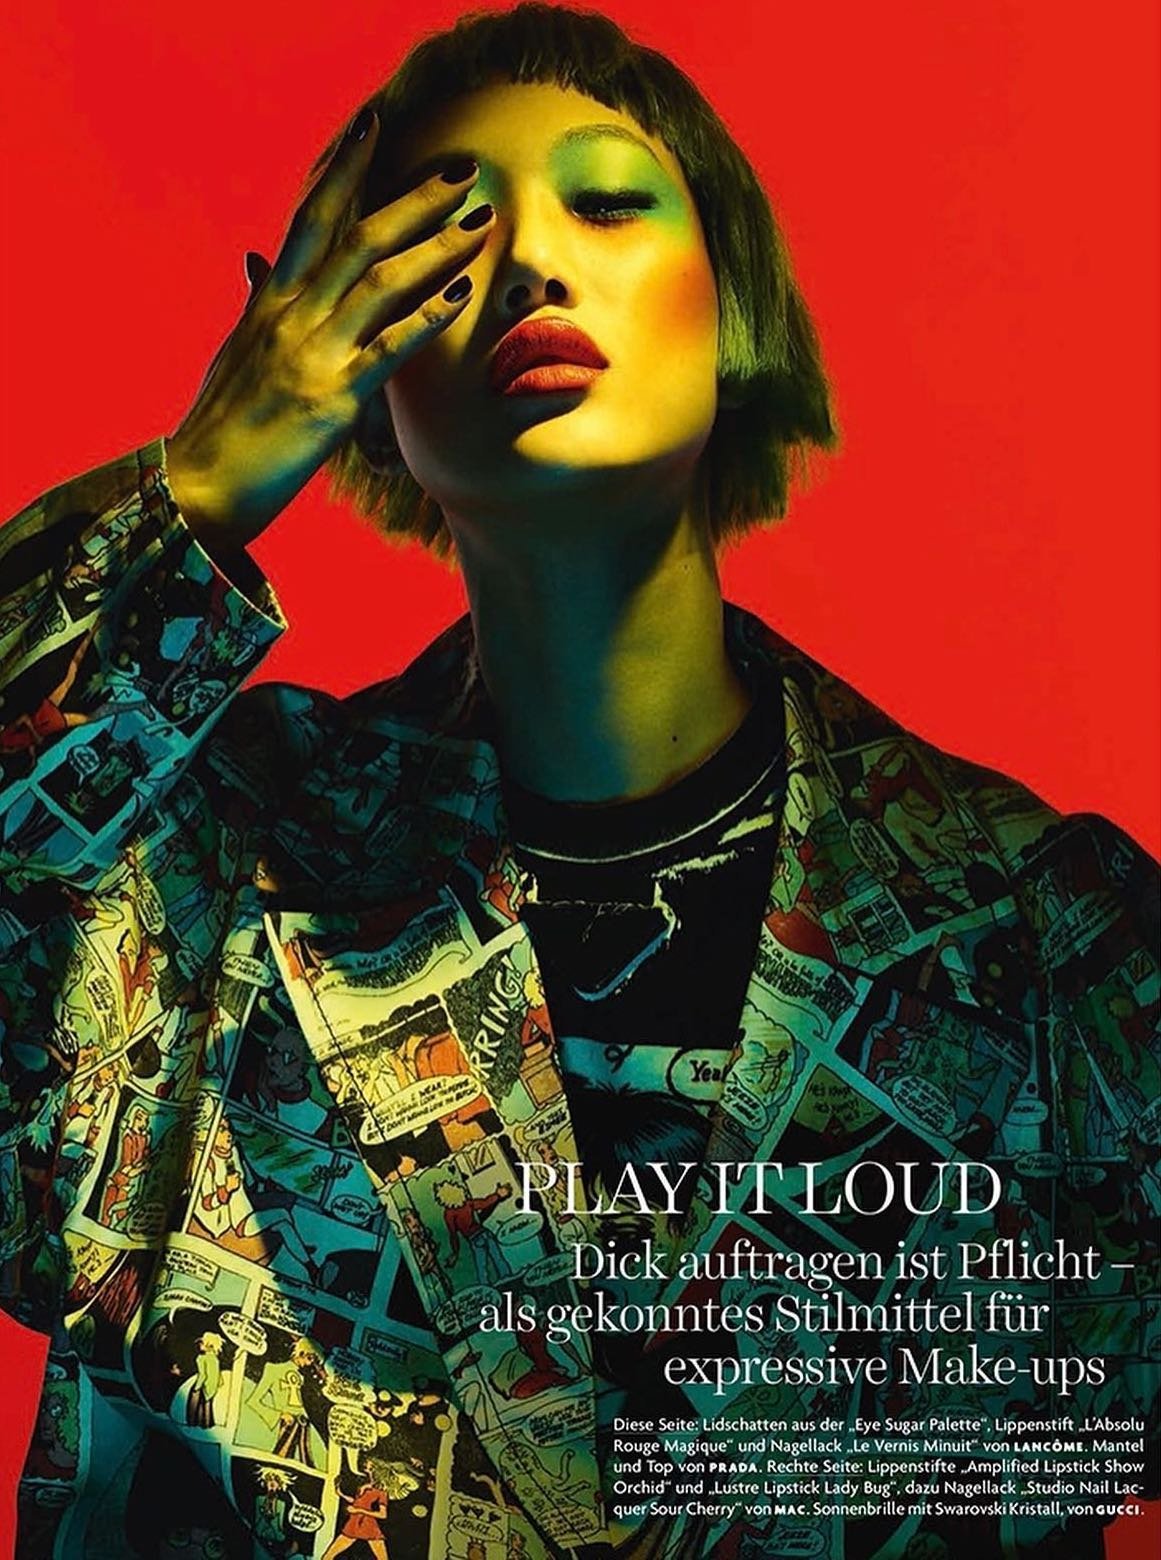 Sora Choi in 'Play It Loud' by Ben Hassett in Vogue Germany